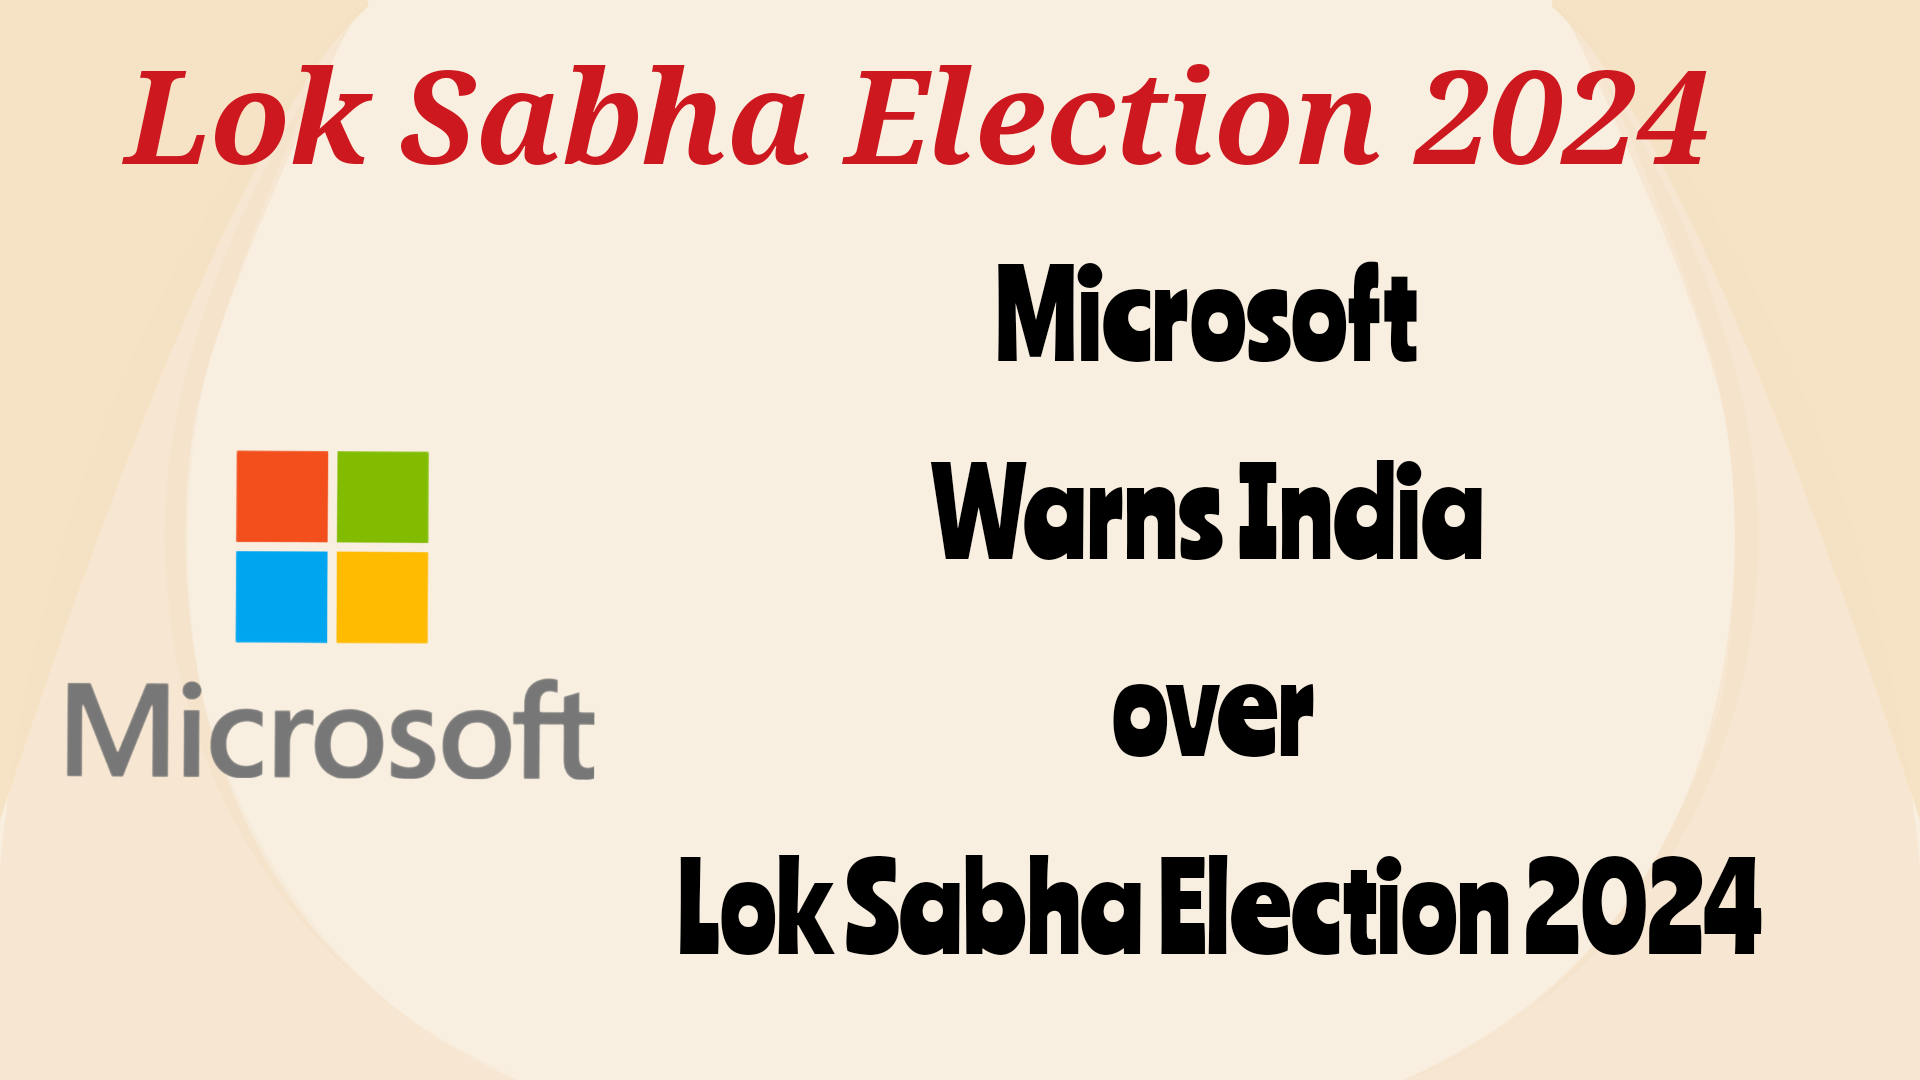 Microsoft warns India over Lok Sabha Election 2024